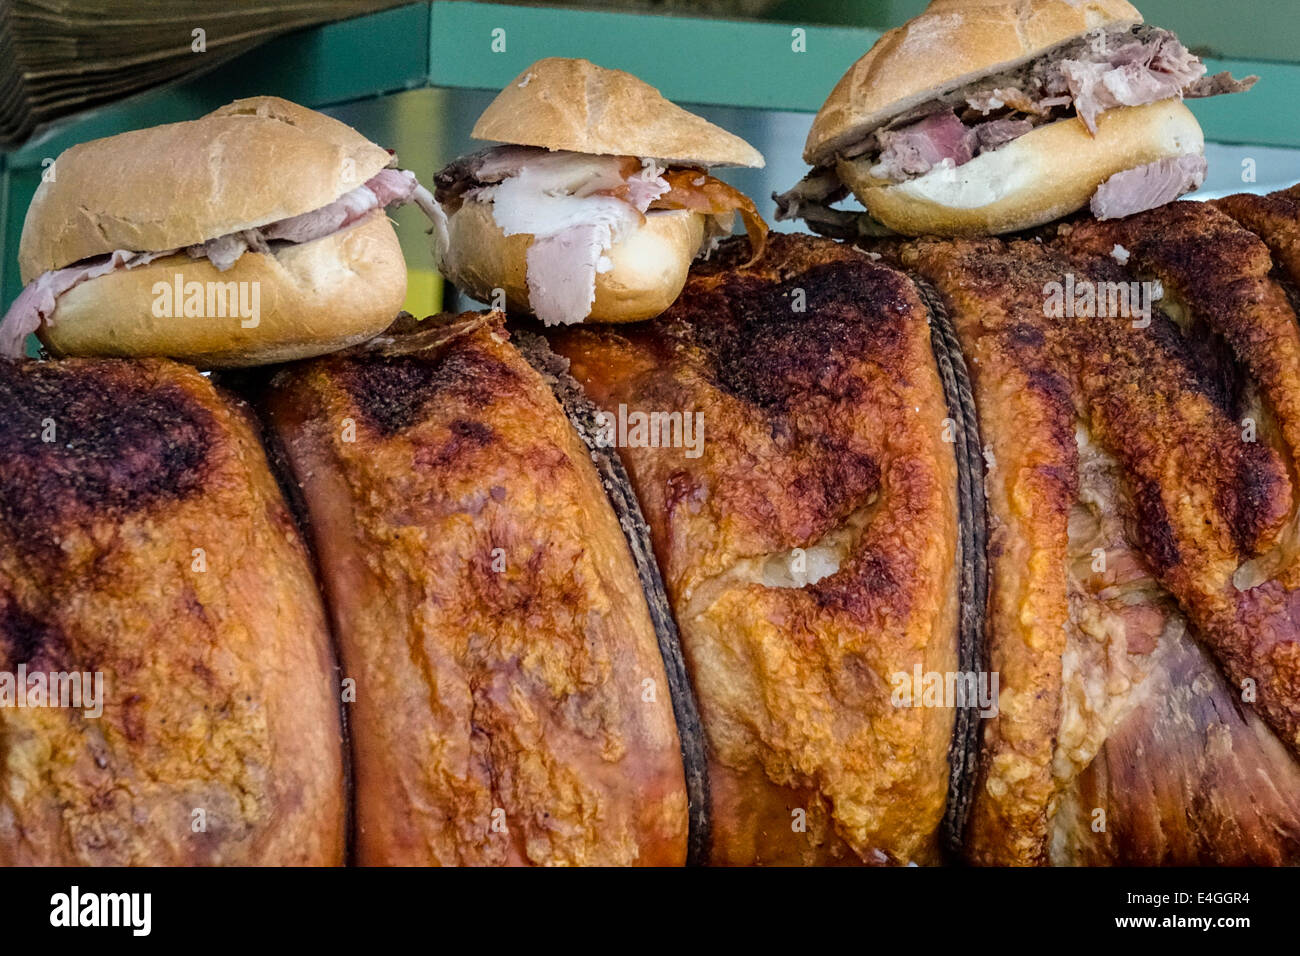 Food stand with the Porchetta pork specialty, weekly market, Siena, Tuscany, Italy, Europe Stock Photo